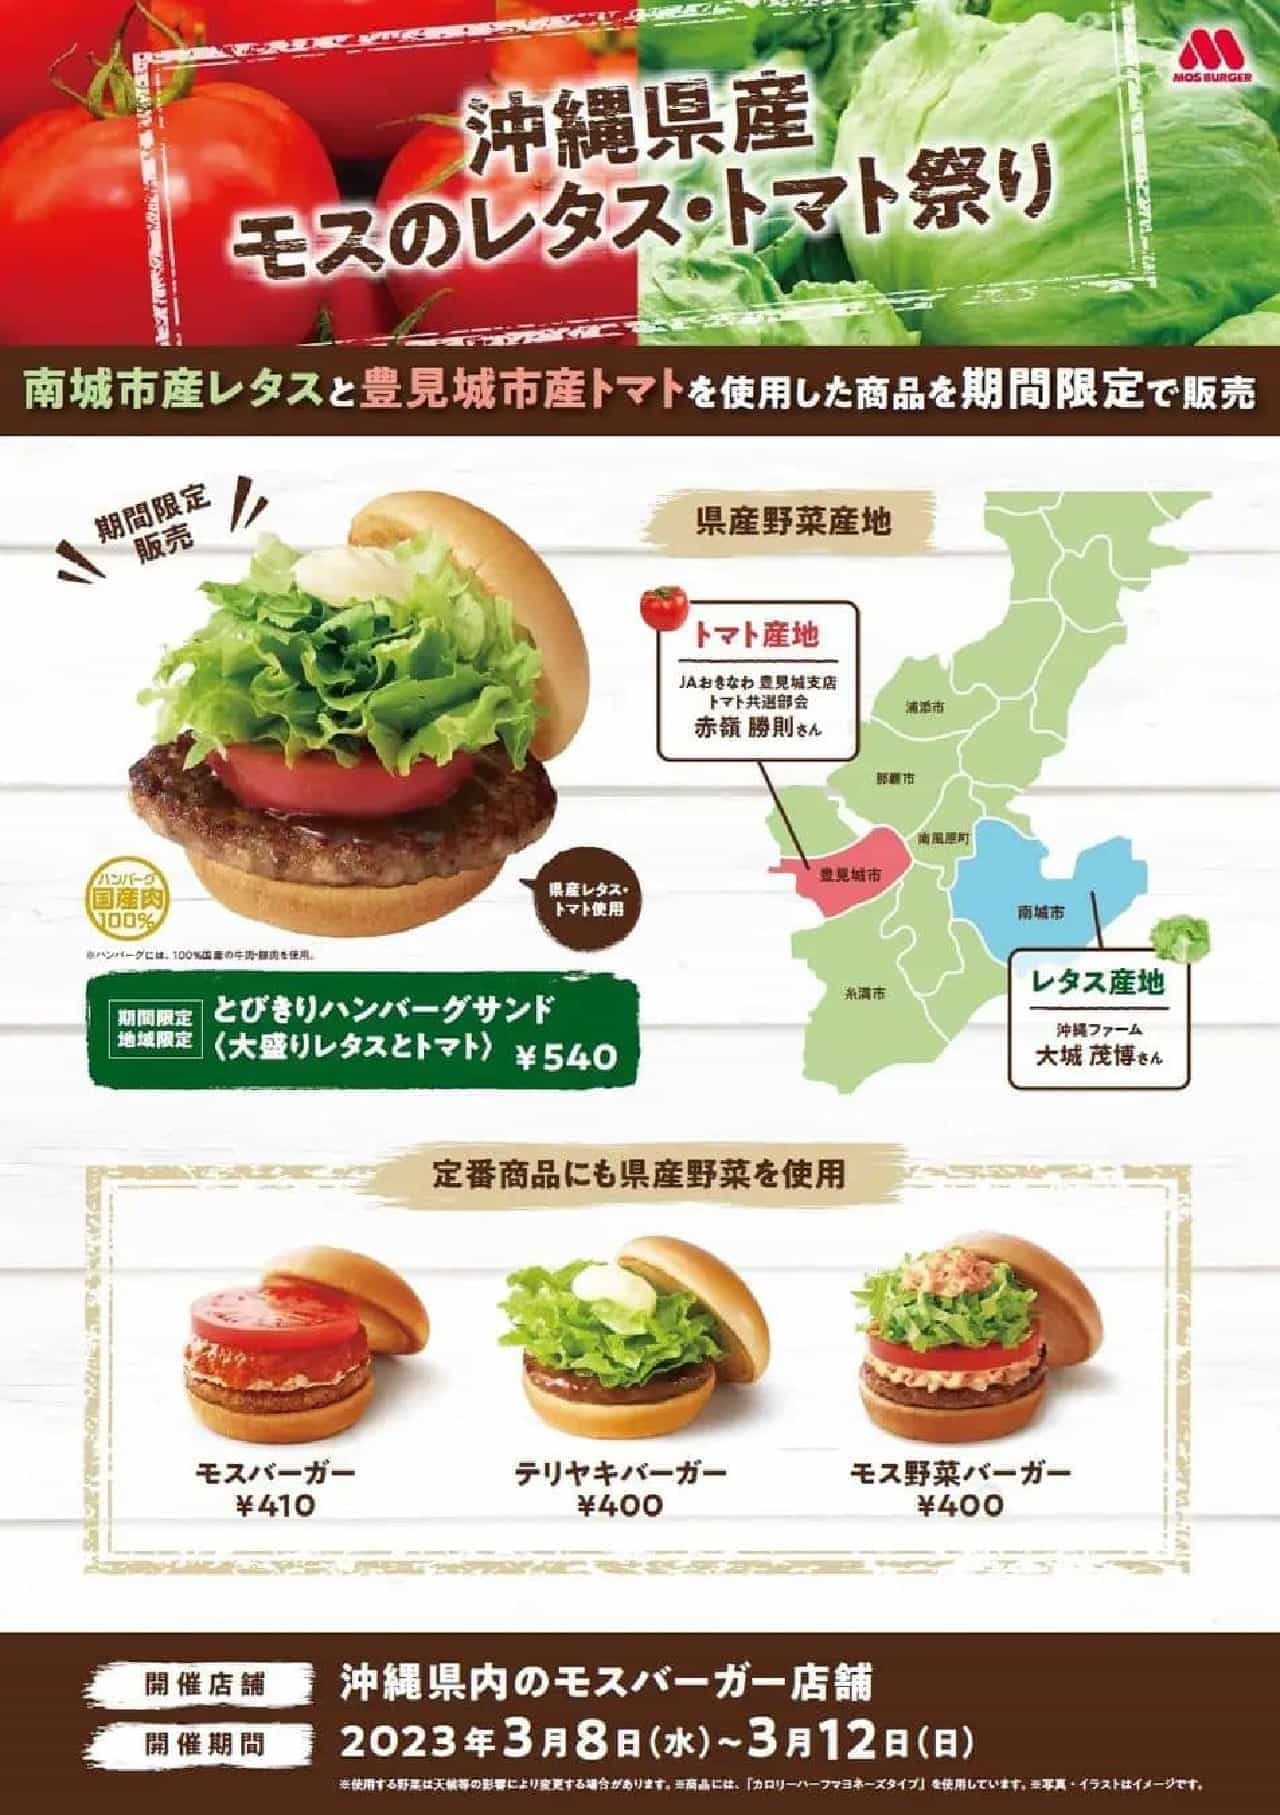 Okinawa Mos Burger "Okinawa Mos Lettuce and Tomato Festival"